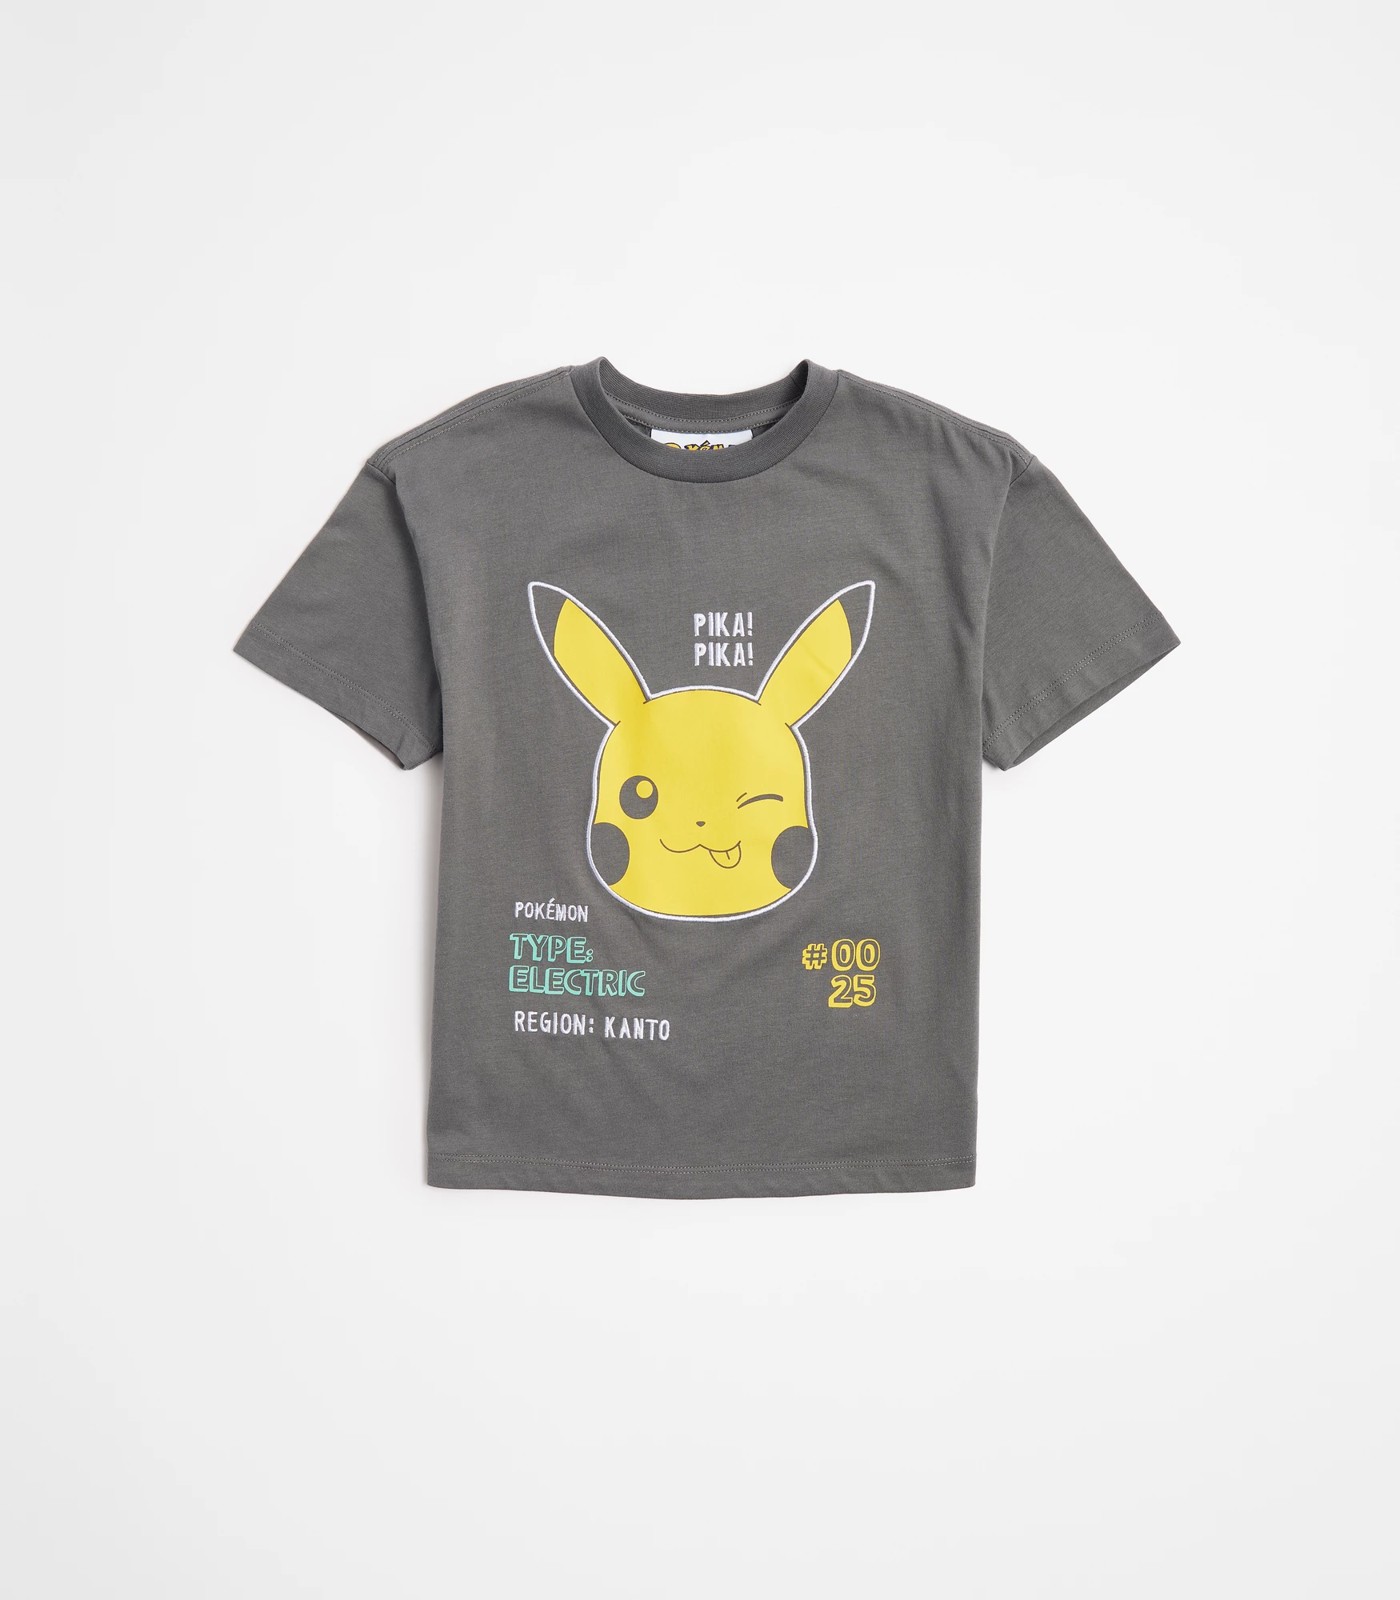 Pokemon T-shirt | Target Australia